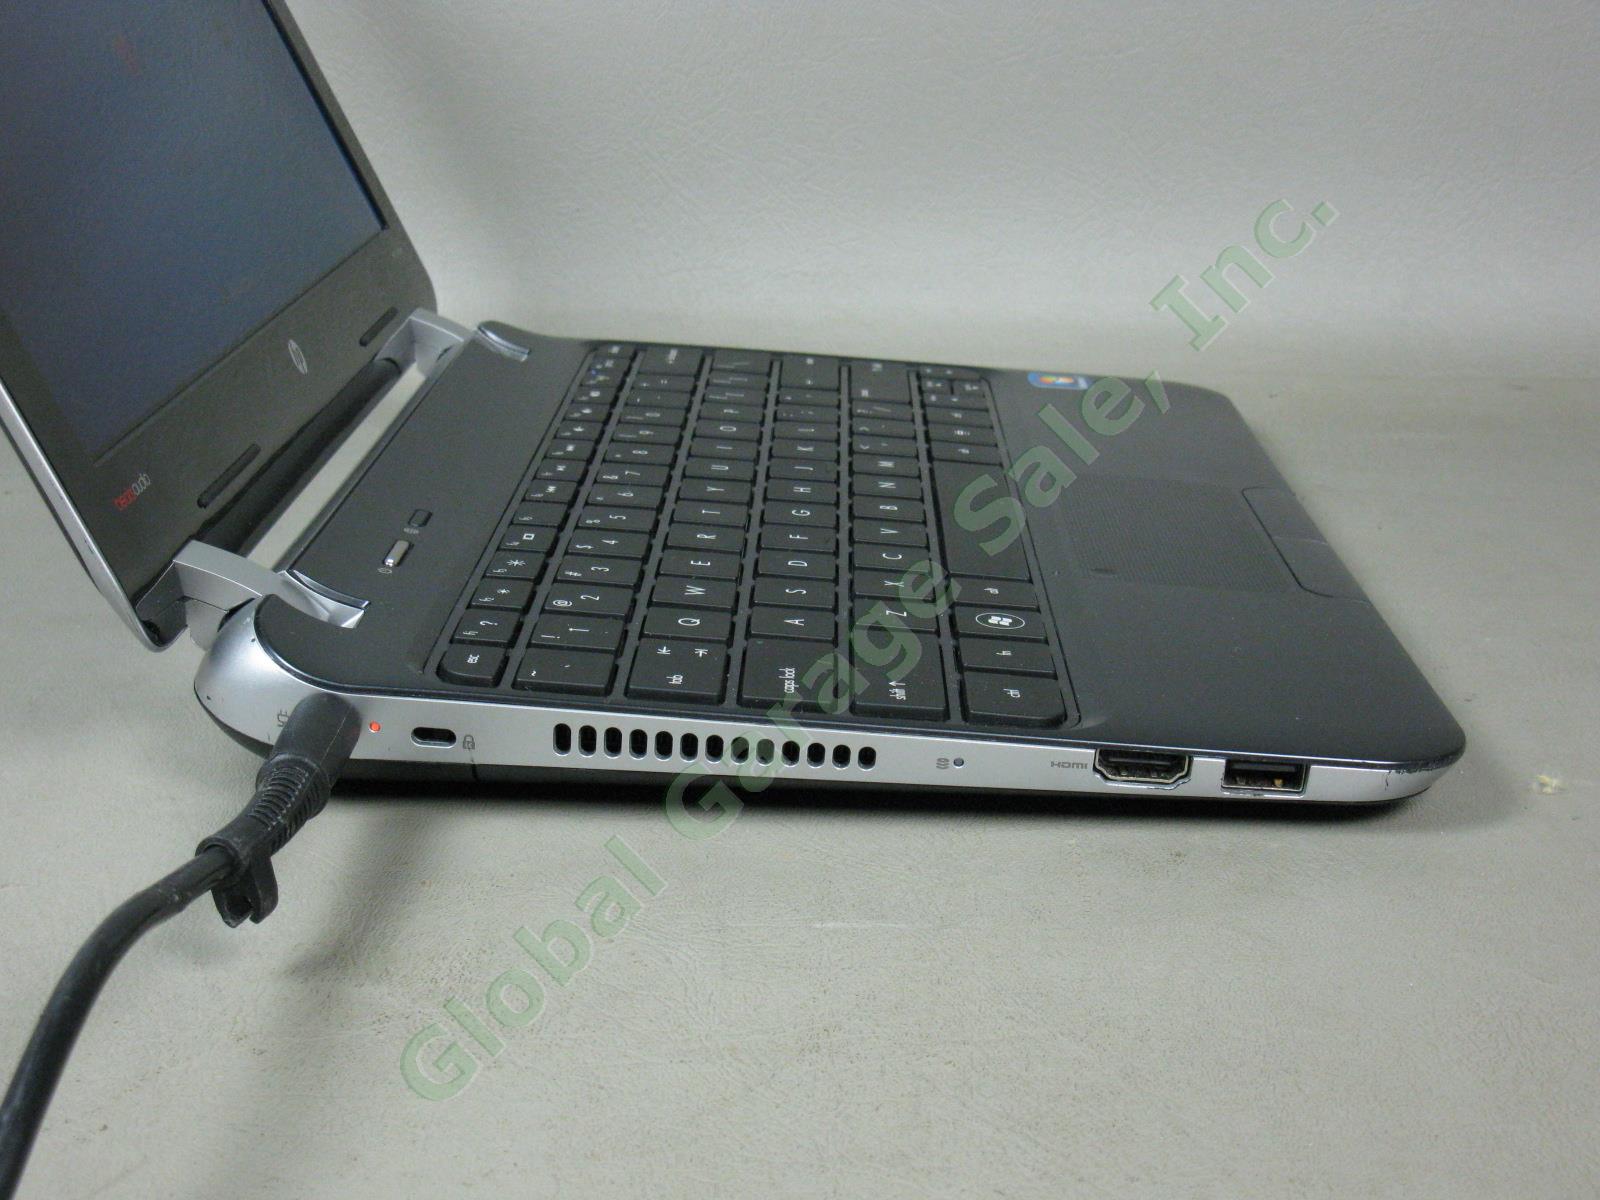 HP 3115m 11.6" Notebook Laptop 1.65GHz 4GB 320GB Windows 7 Ultimate Beats Audio 5